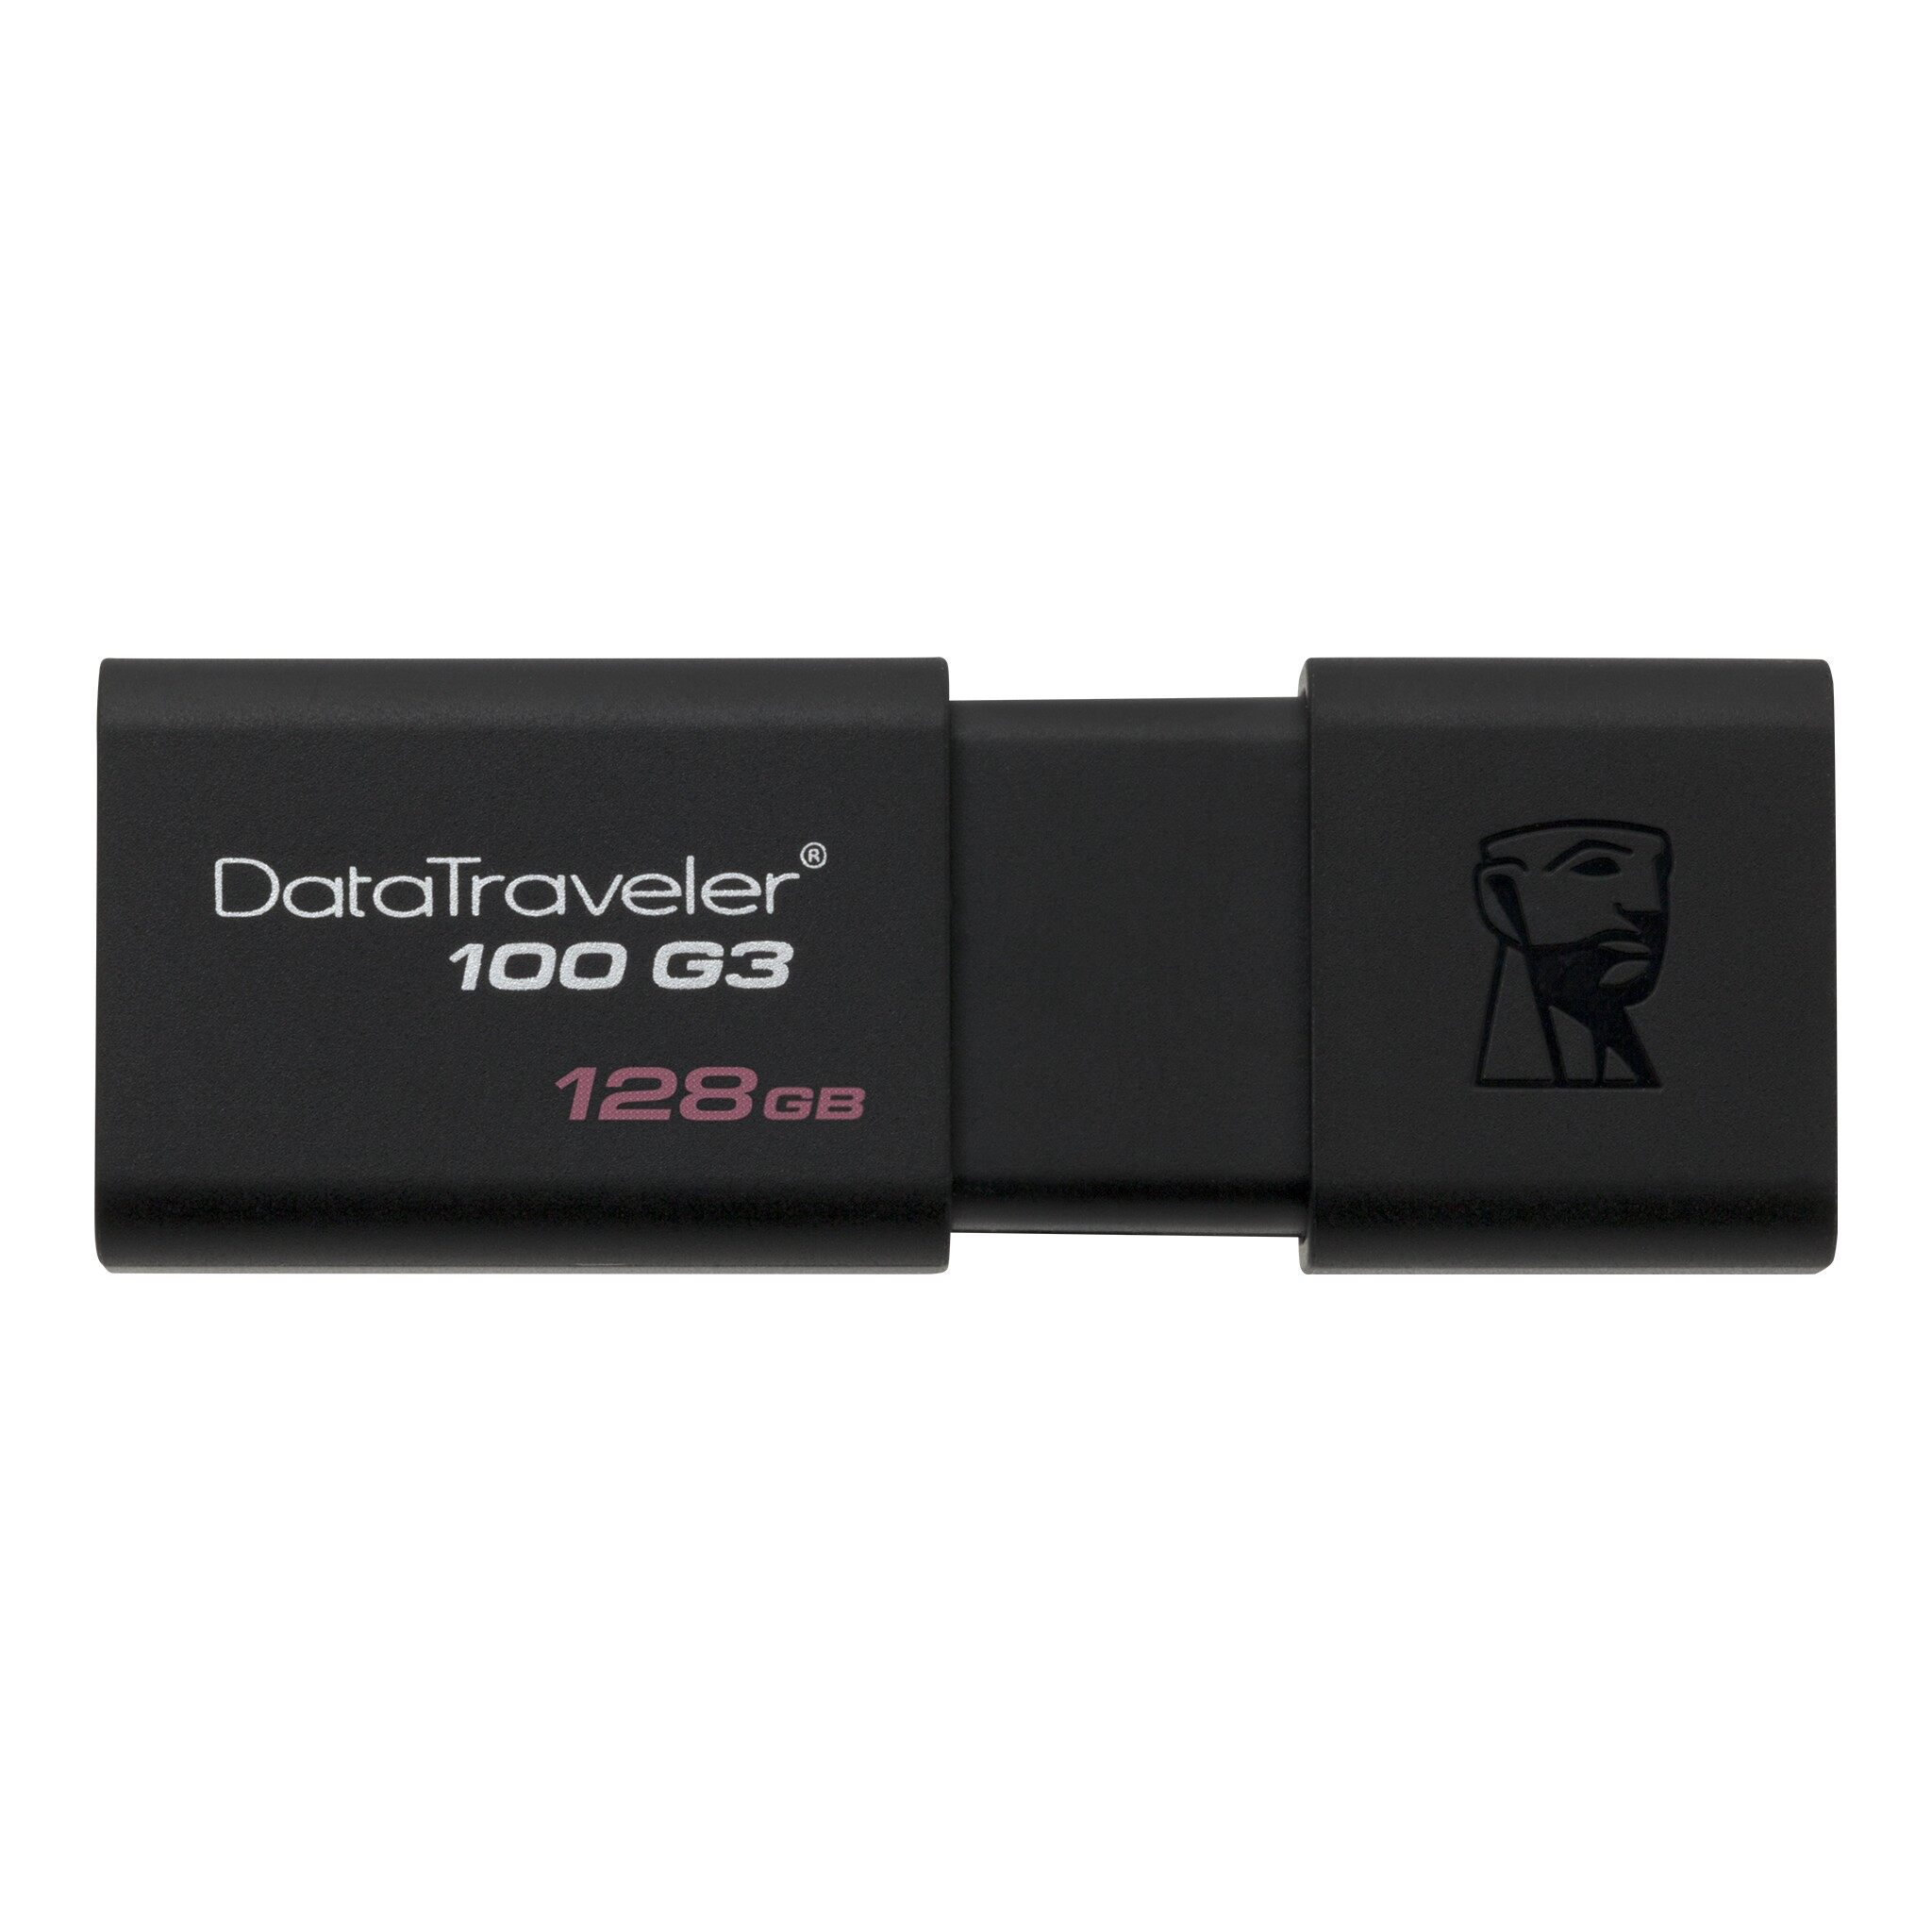 Kingston DataTraveler 100 G3 32GB / 64GB / 128GB / 256GB Pen Drive USB 3.1 Gen 1 (USB 3.0) Flash Drive (DT100G3) USB 2.0 Compatible Windows & Mac Compatible Five-Year Warranty Stylish Black-on-Black Sliding Cap Design Pendrive